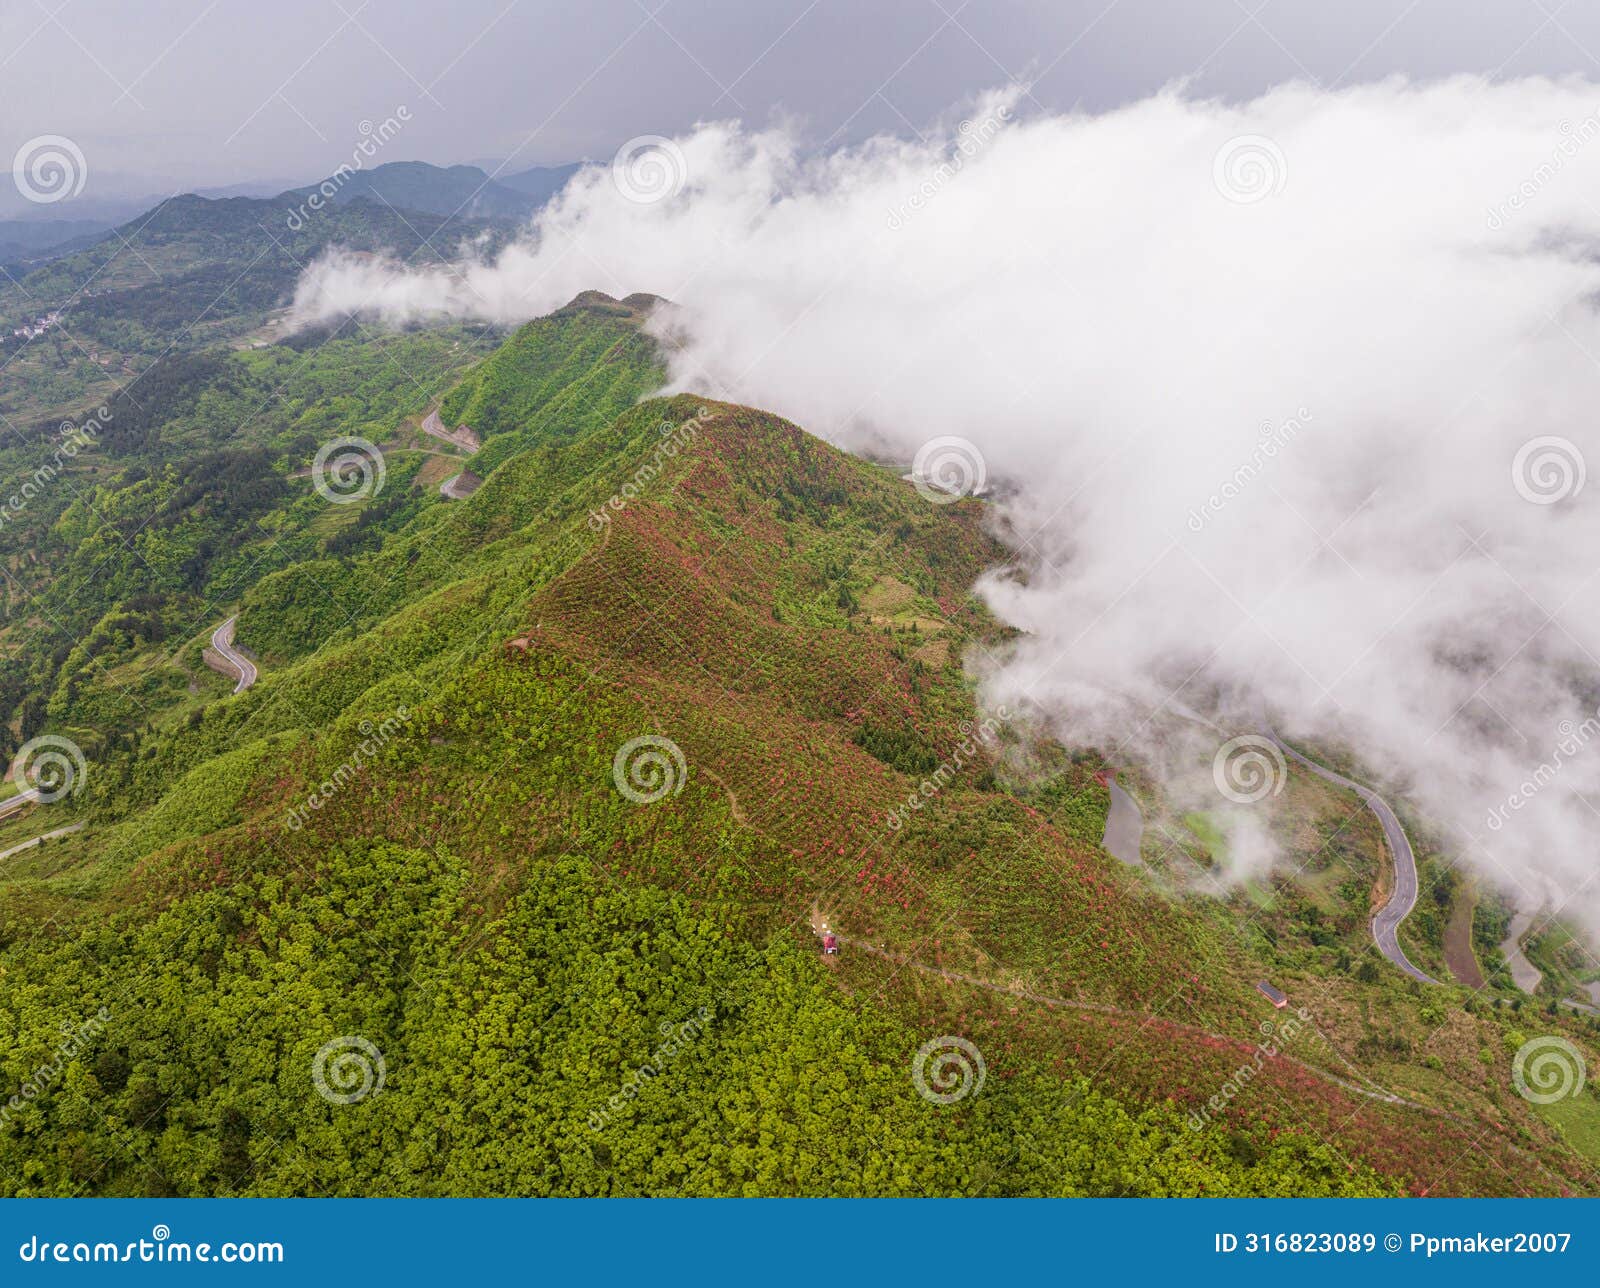 white clouds surround the azalea-filled hillside